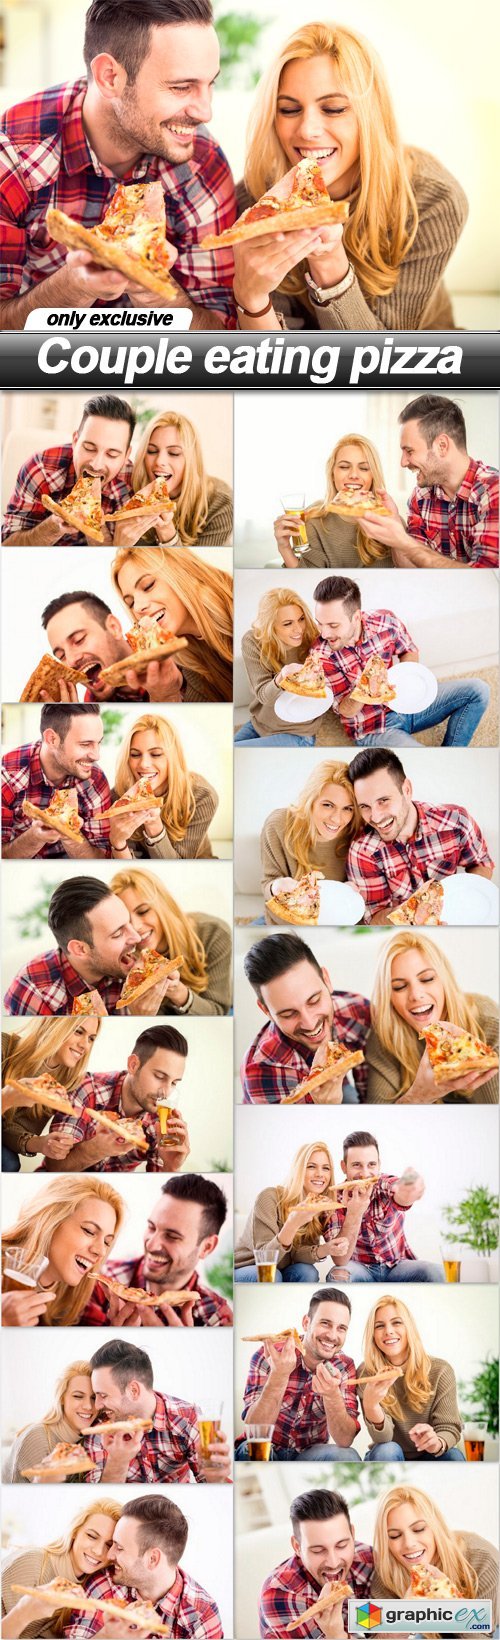 Couple eating pizza - 15 UHQ JPEG